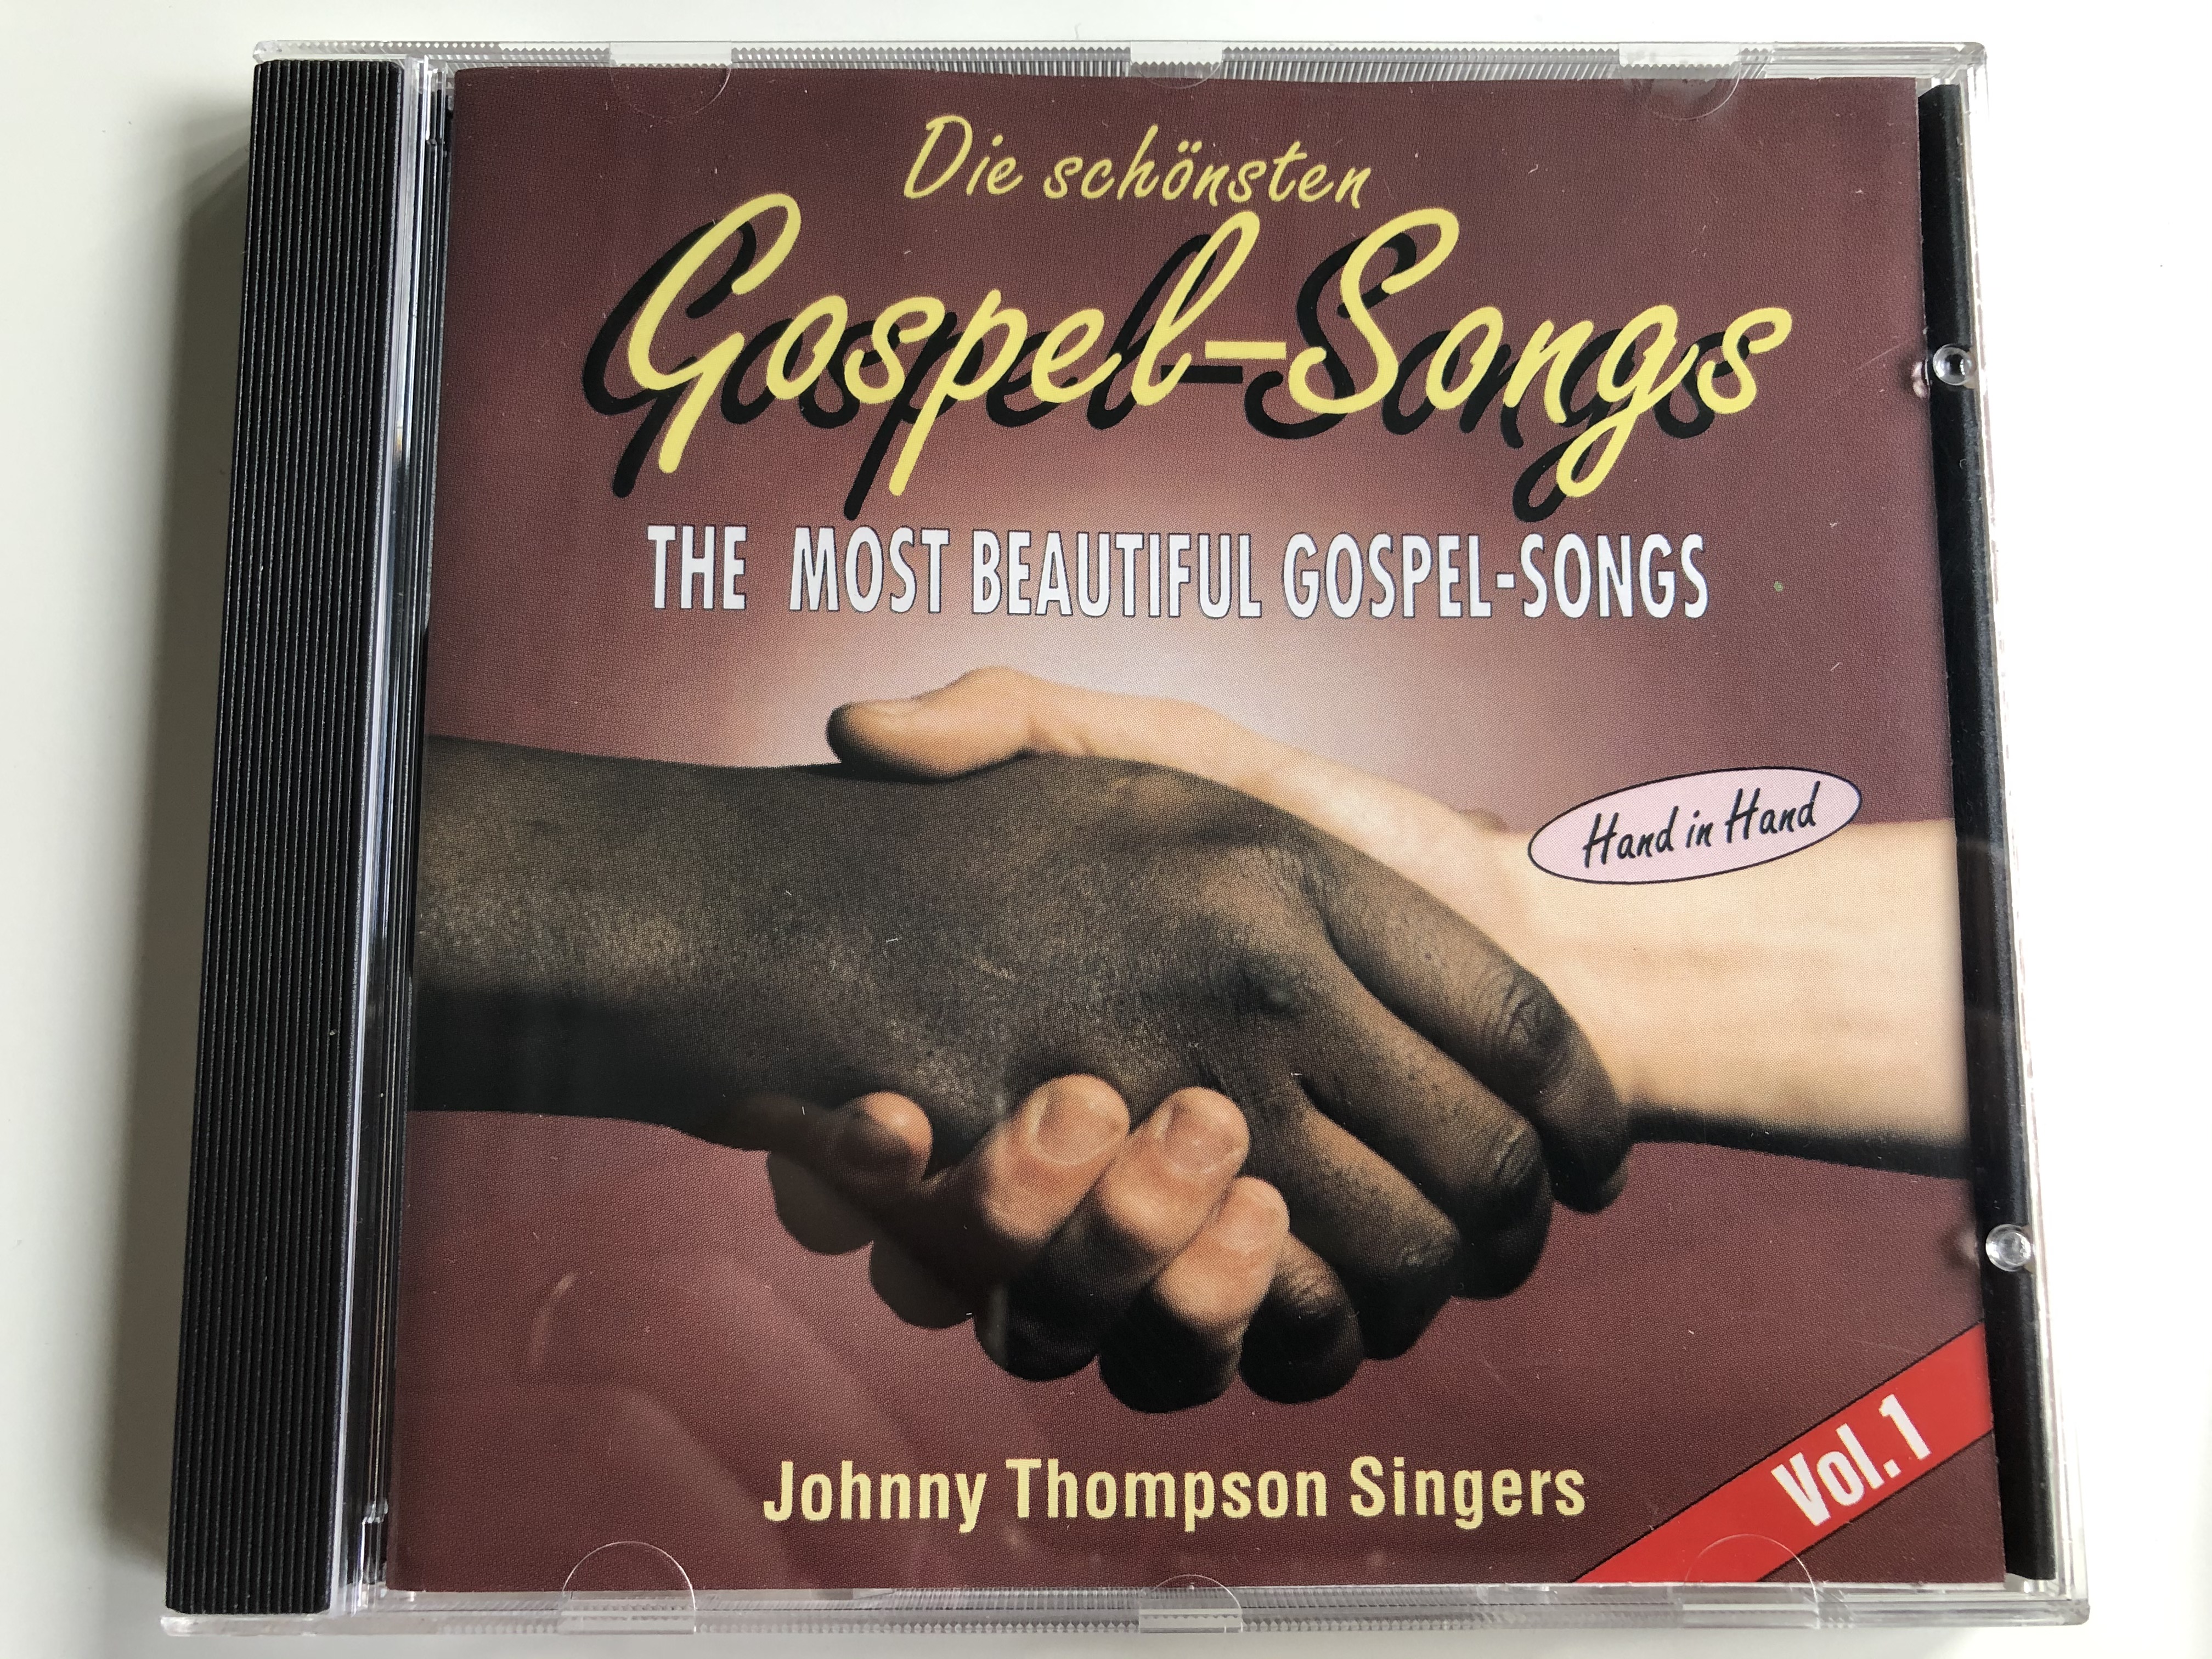 die-schonsten-gospel-songs-the-most-beautiful-gospel-songs-hand-in-hand-johnny-thompson-singers-high-grade-3x-audio-cd-105-5-.jpg